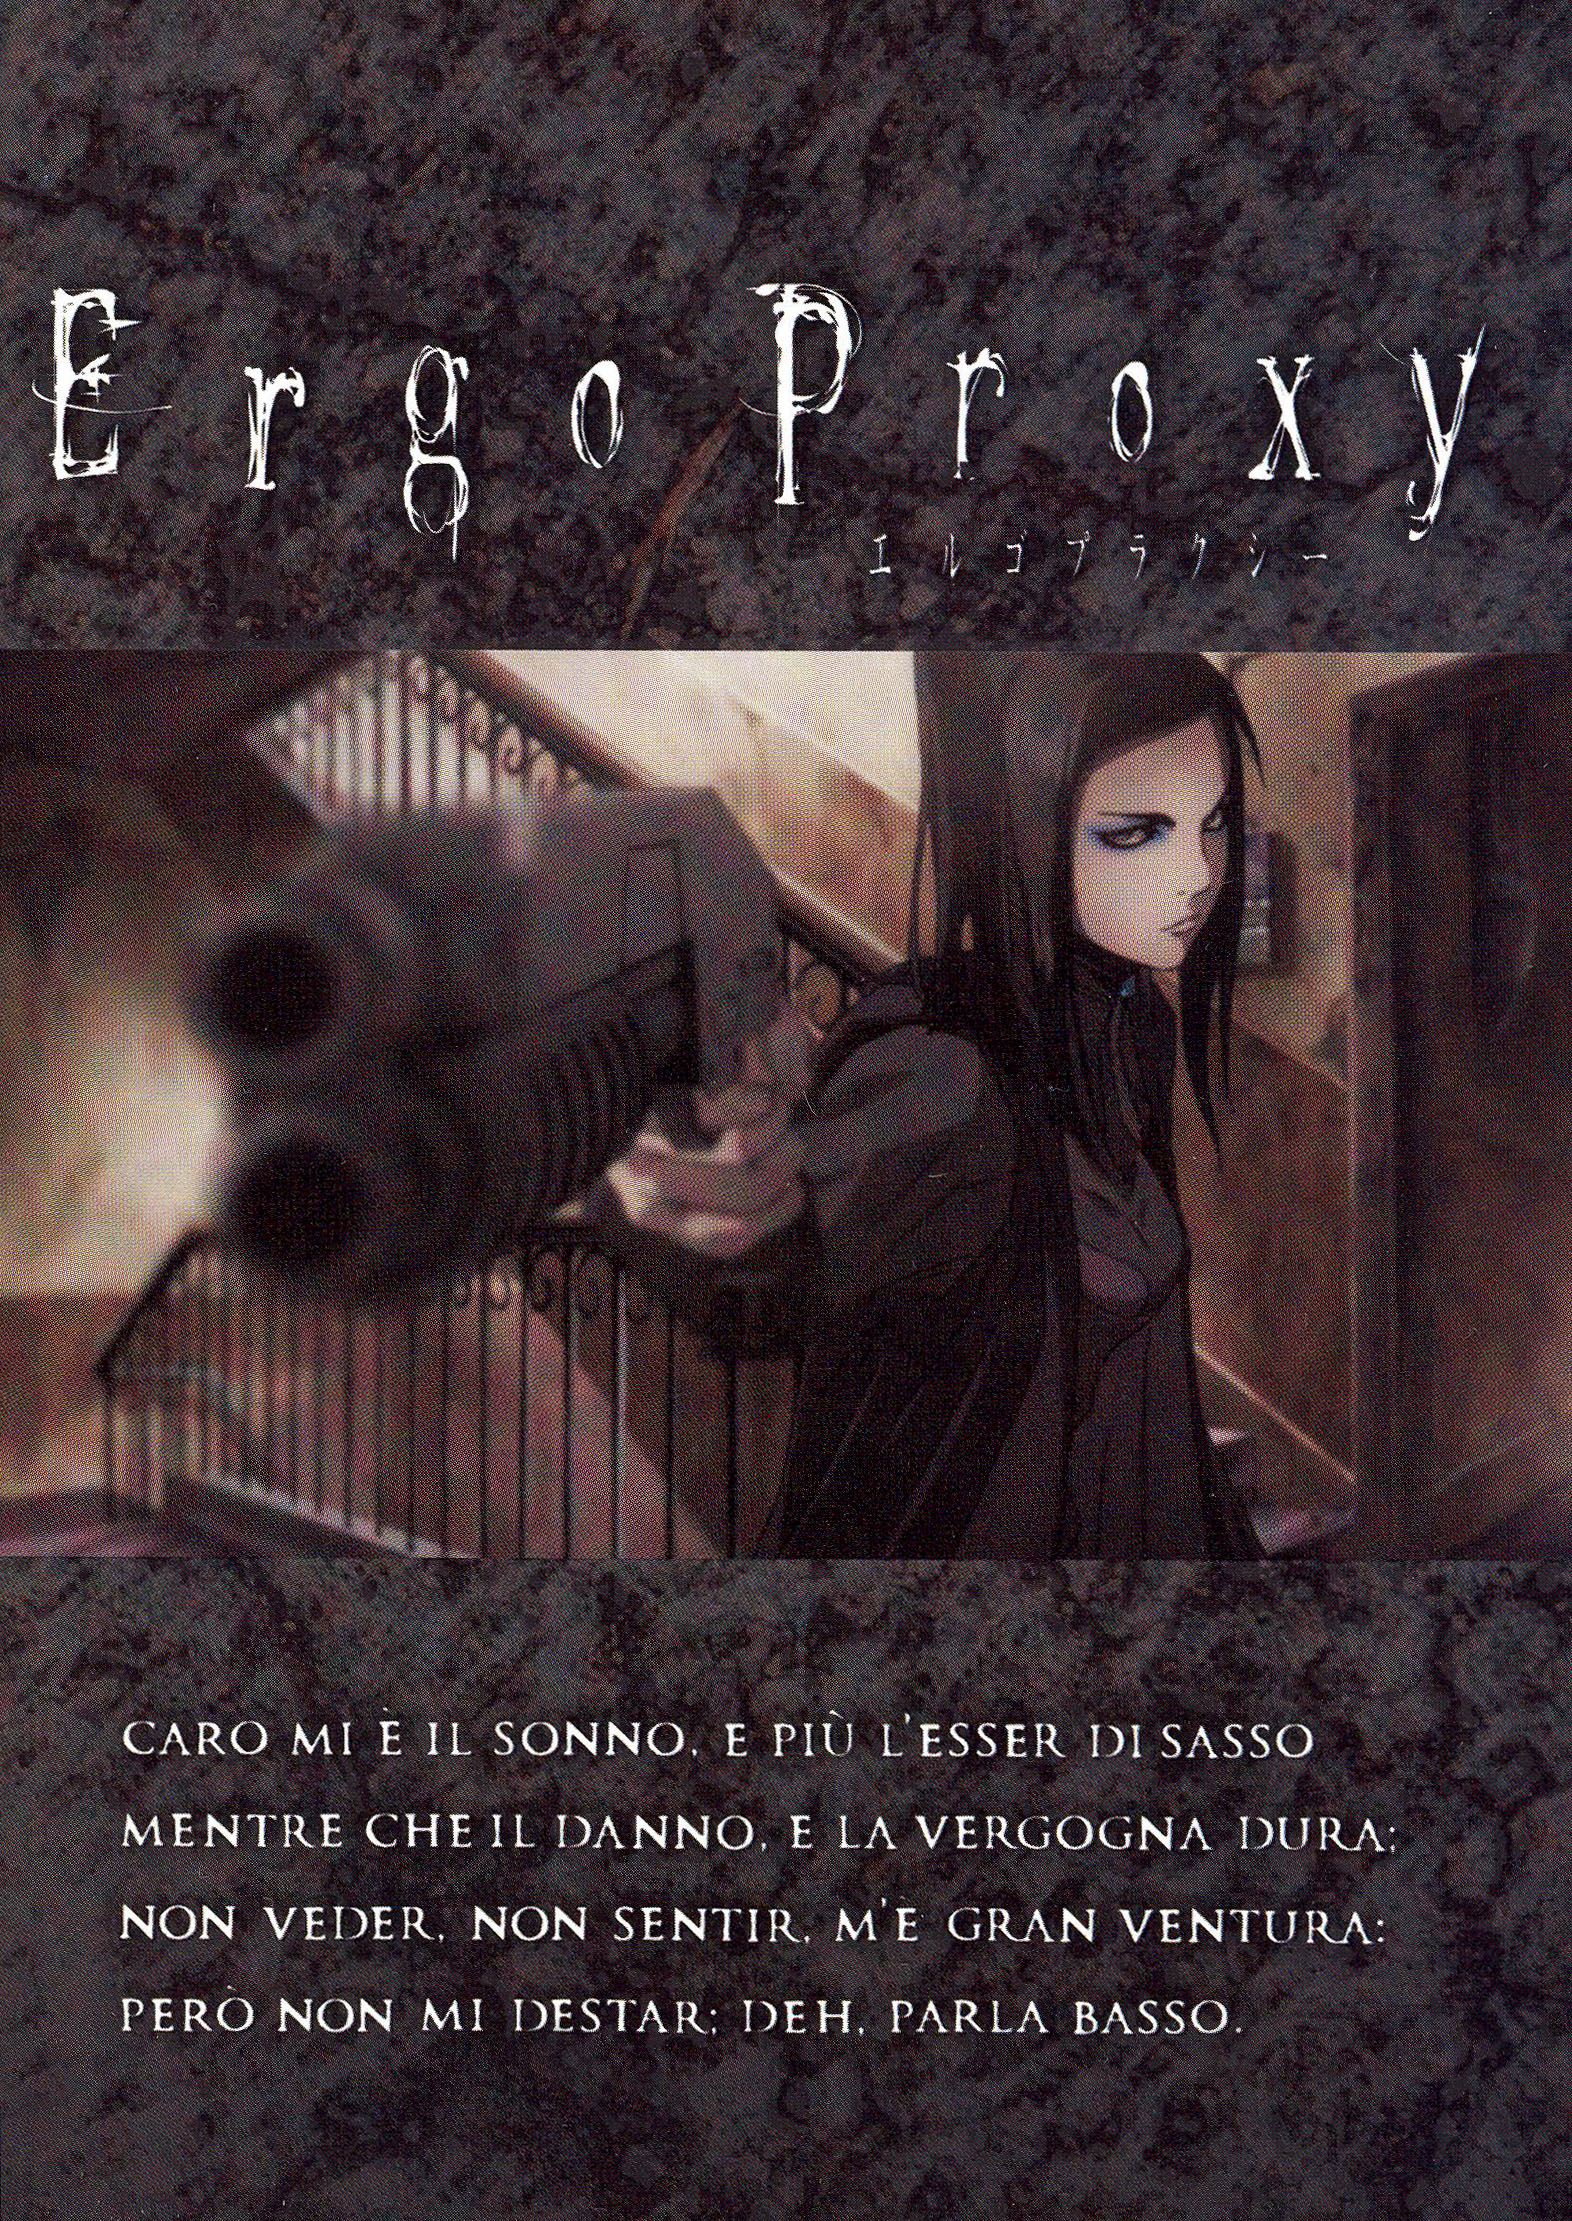 Watch Ergo Proxy S01:E01 - Awakening - Free TV Shows